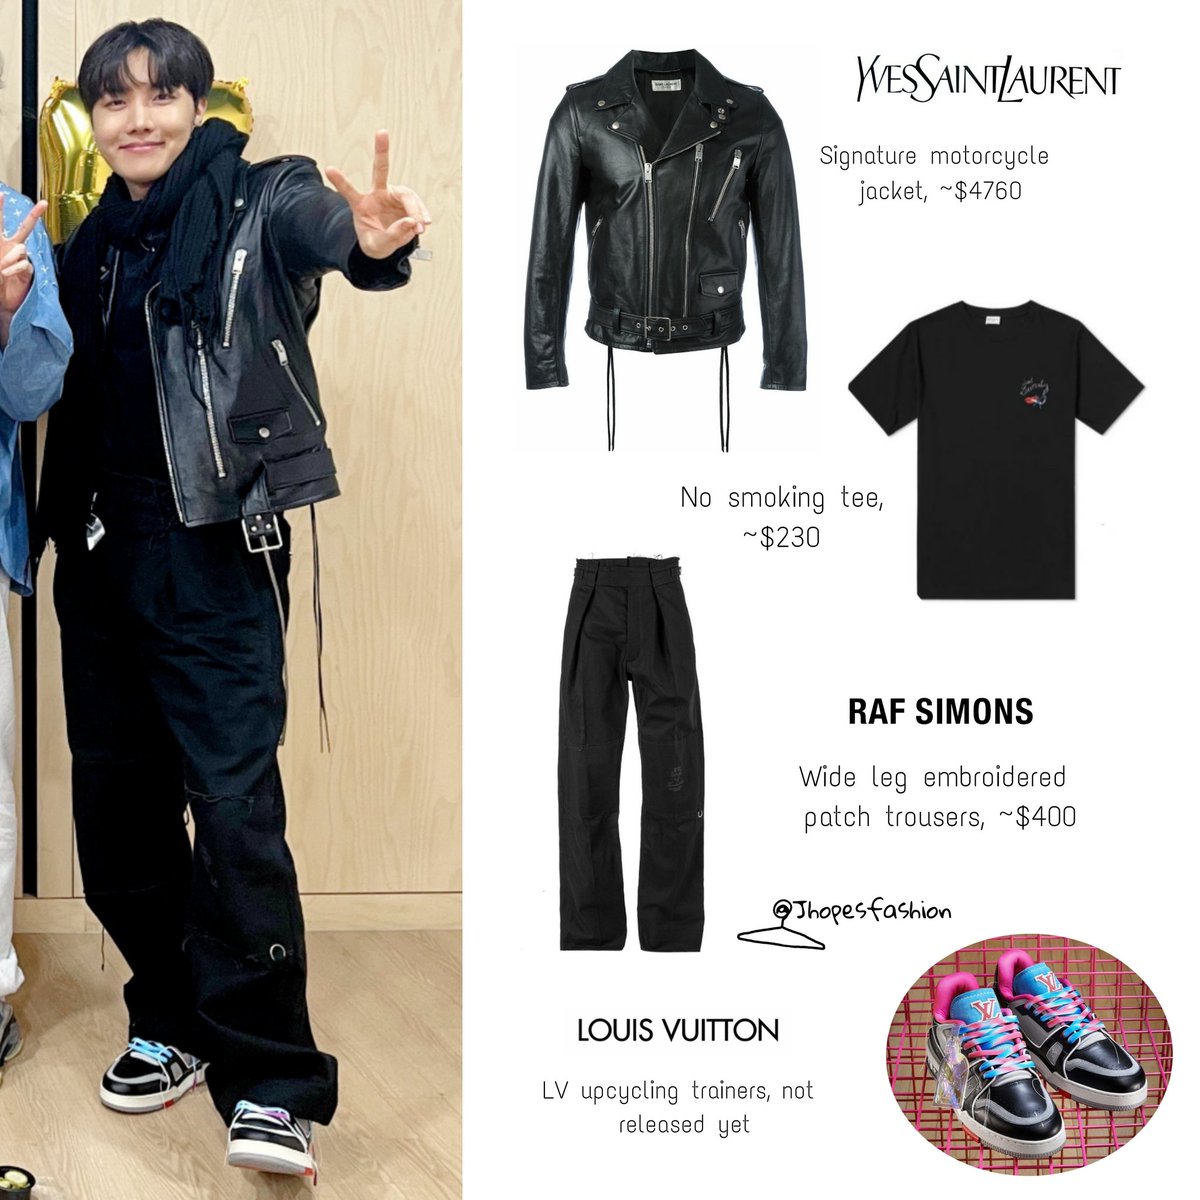 j-hope's closet (rest) on X: J-hope's Louis Vuitton denim jacket and  inside out t-shirt 200723 - Twitter post #Jhope #제이홉 #Jhopefashion #BTS   / X